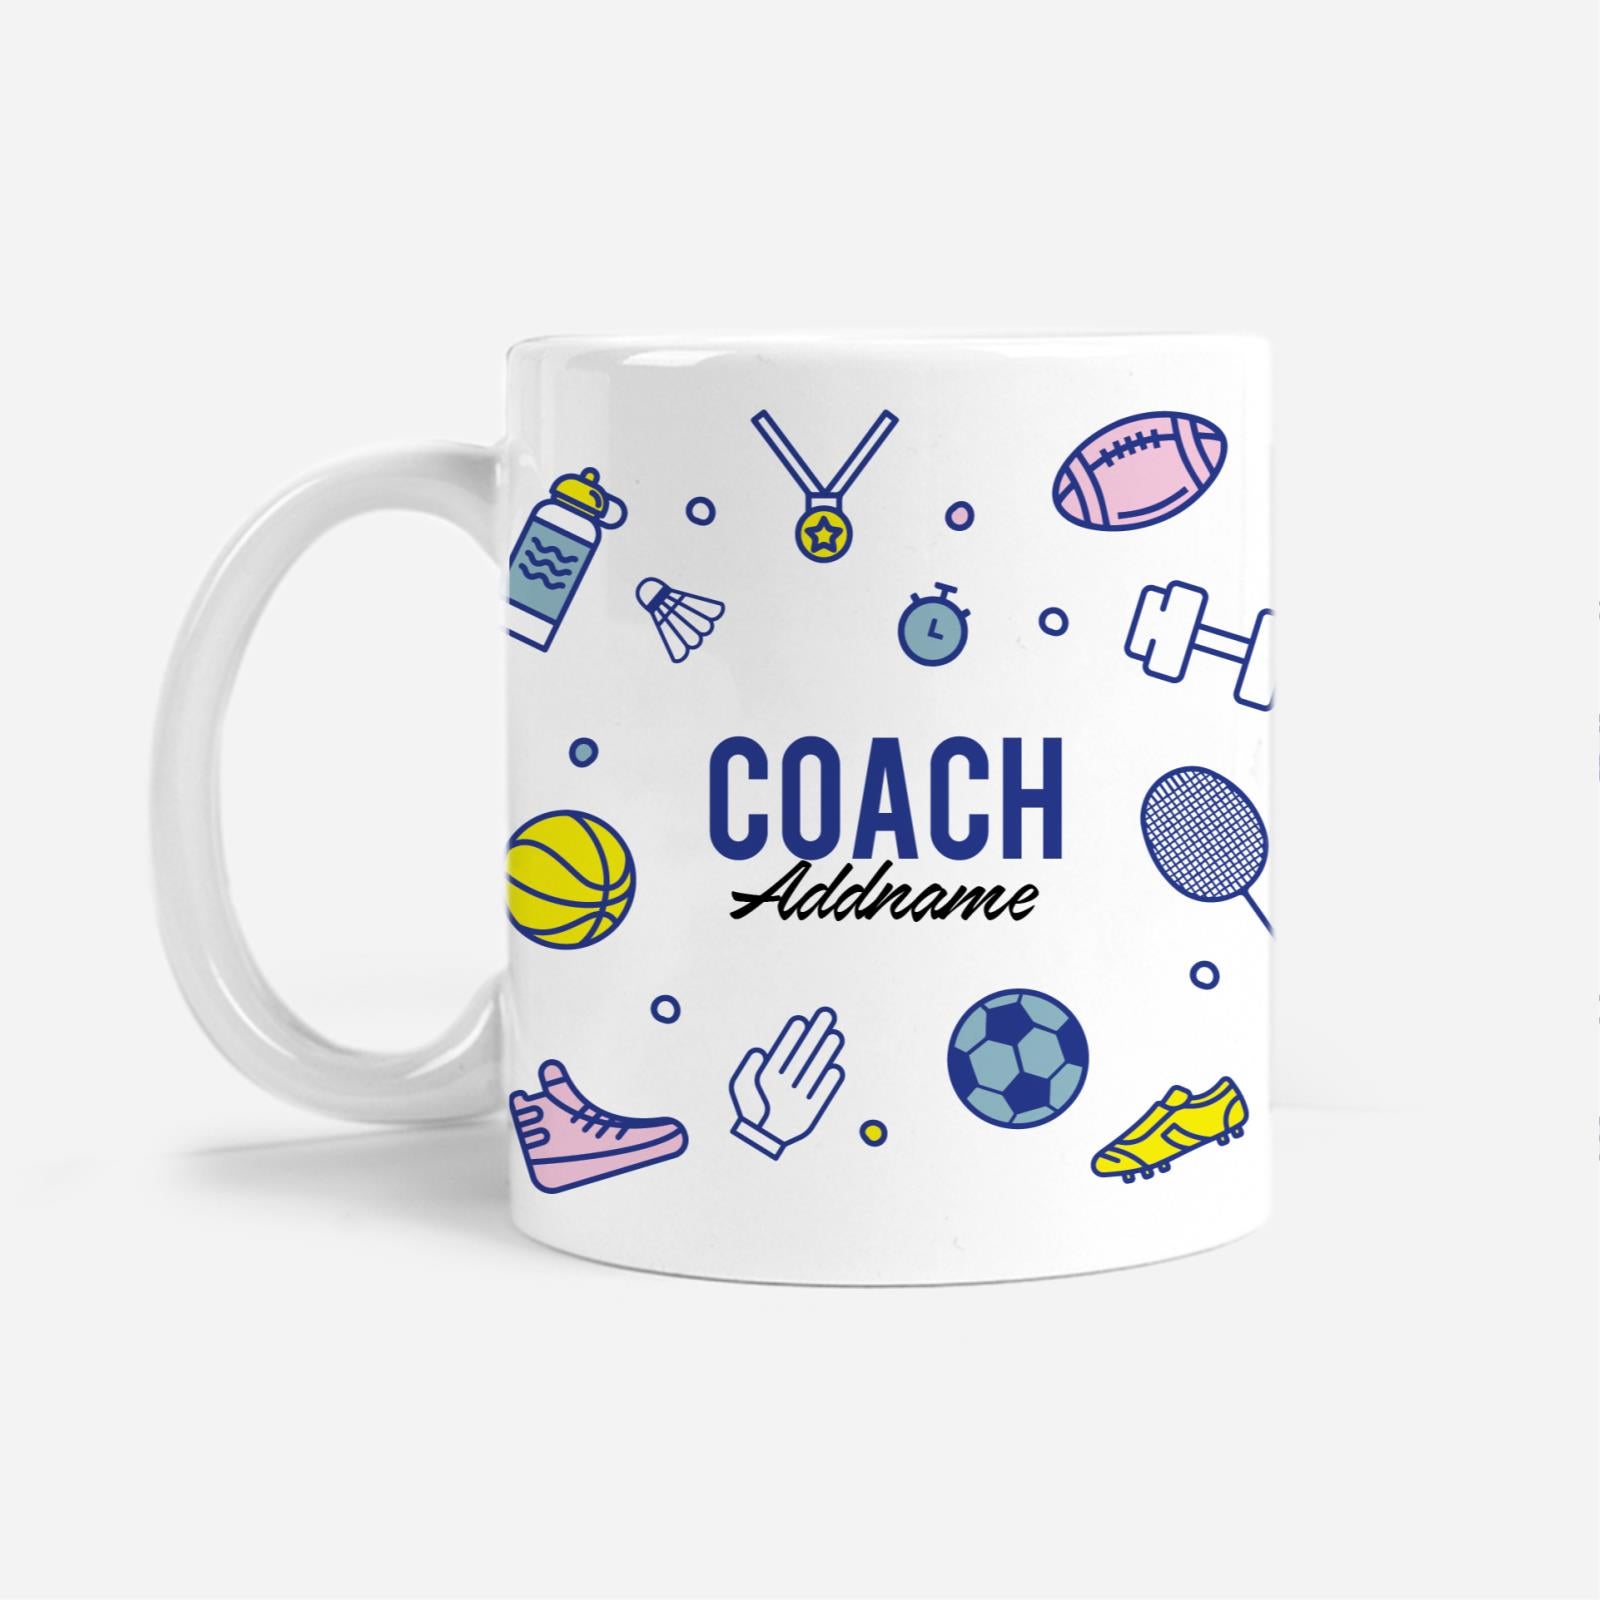 Teacher Title Mug - Coach